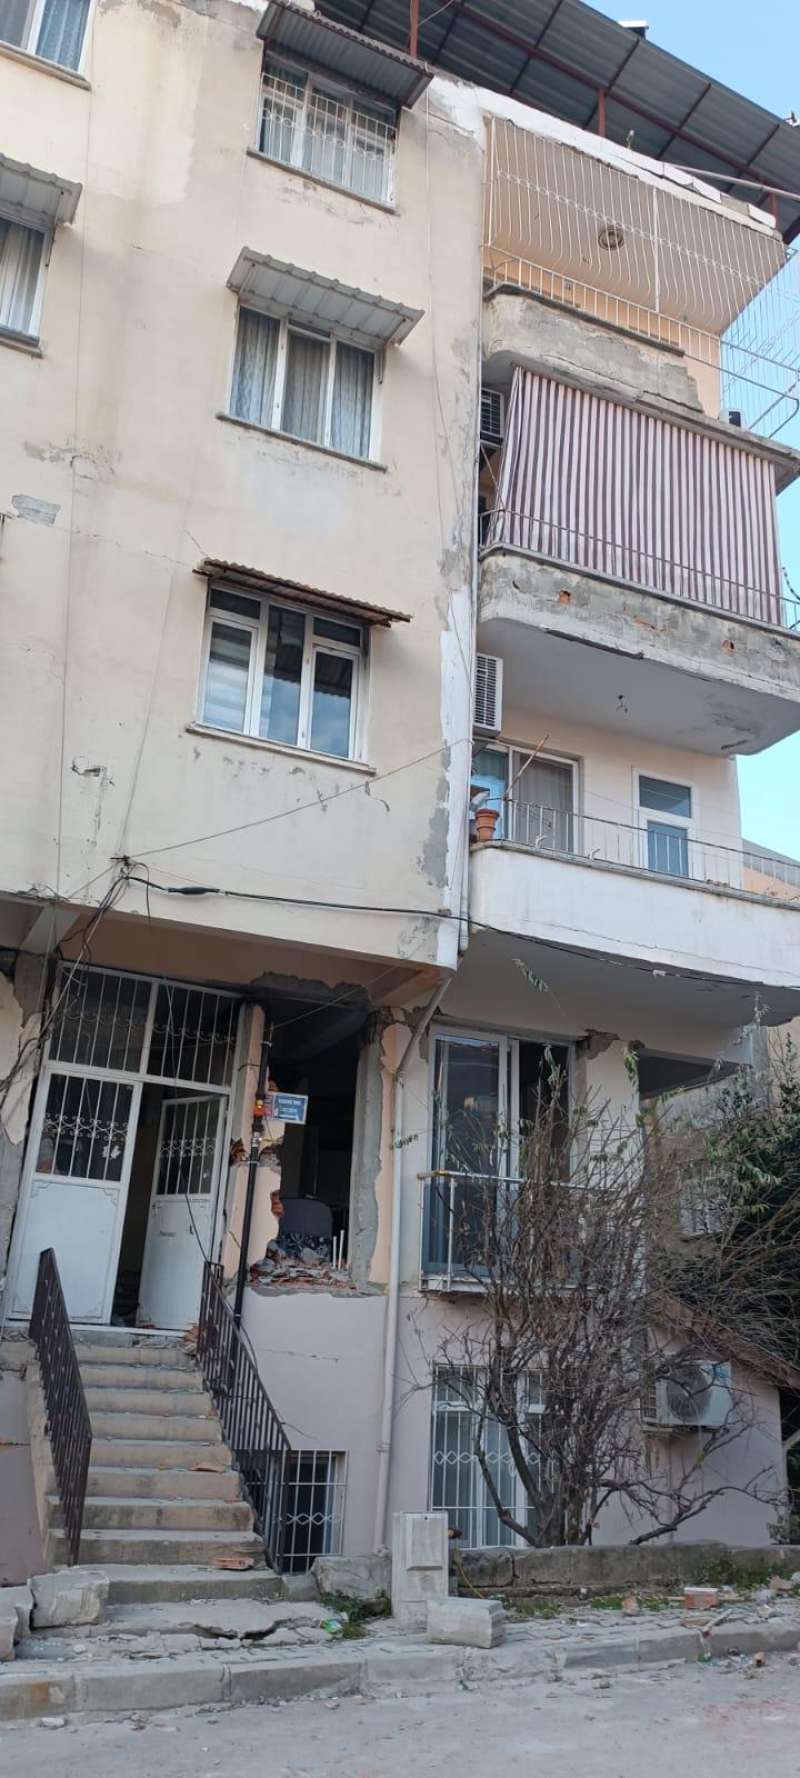 Damage To Buildings Turkey Update Feb2023